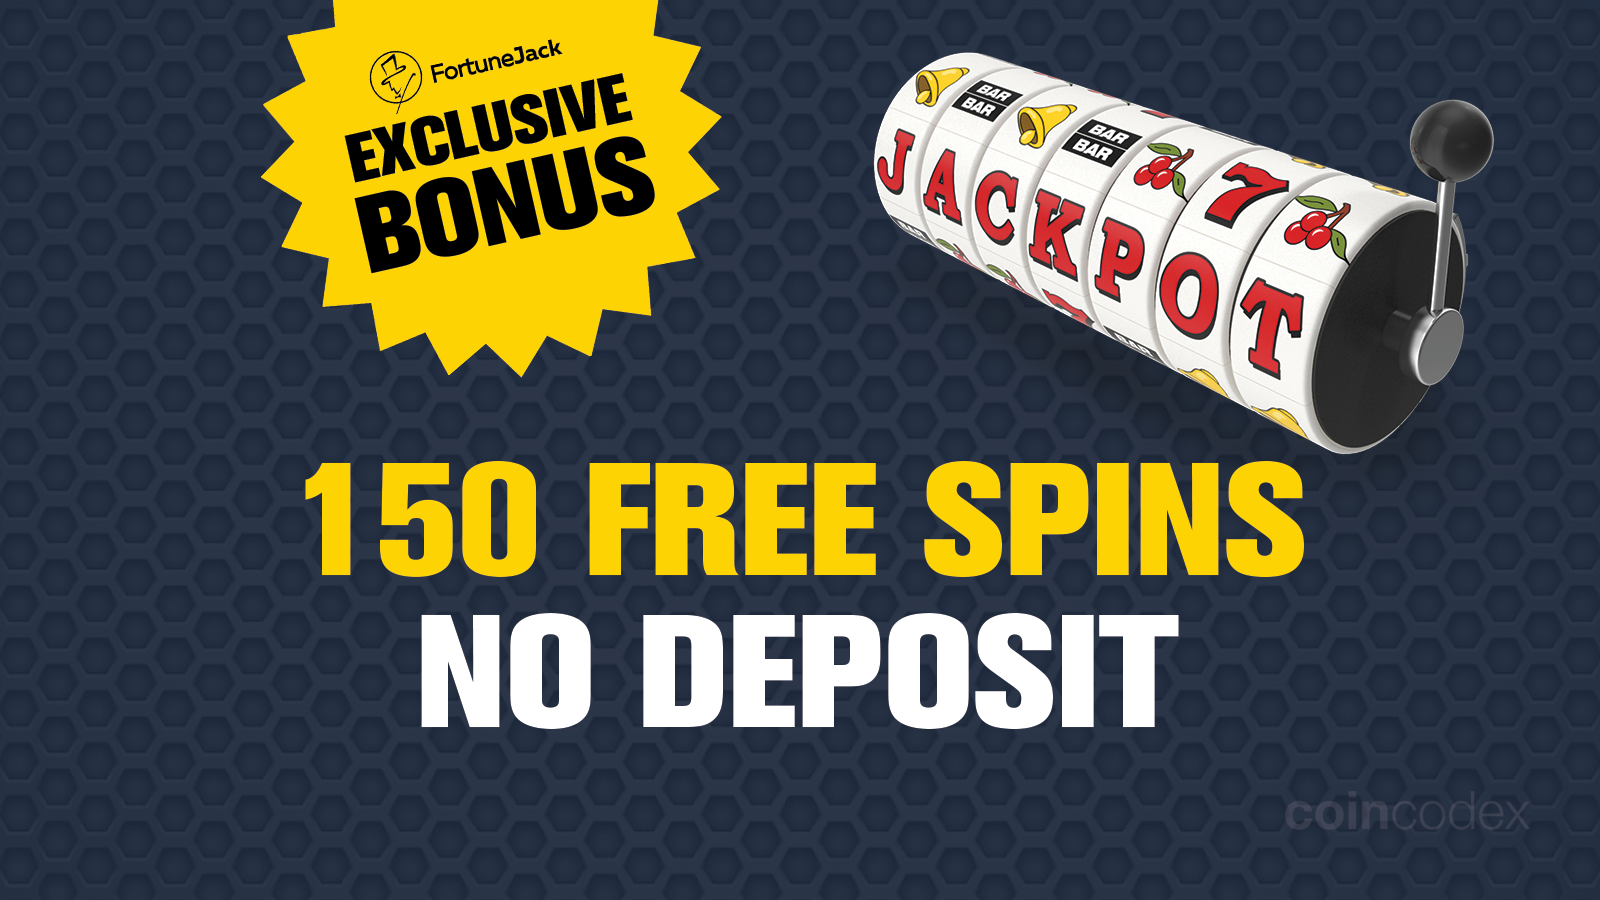 FortuneJack Bonus Code ᐅ FJBONUS (Free Spins, No Deposit Offers & More) | bitcoinhelp.fun